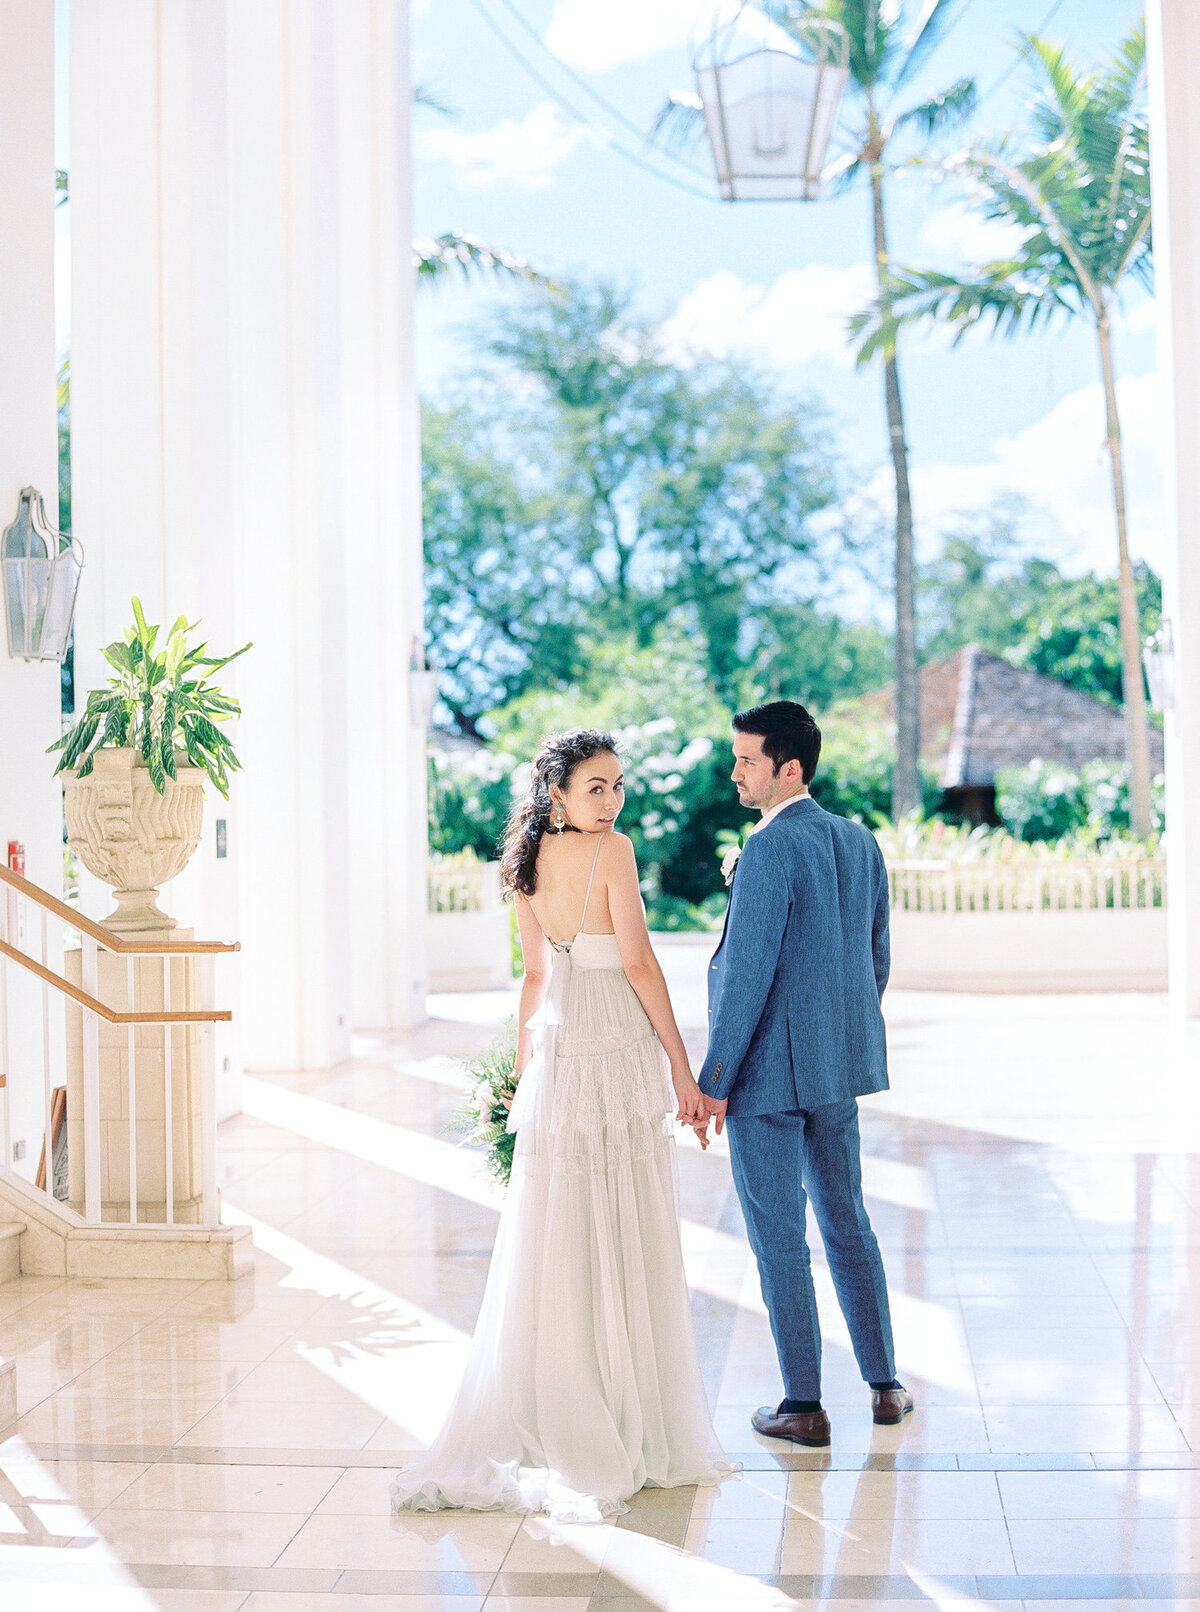 Shaula + Ken | Hawaii Wedding & Lifestyle Photography | Ashley Goodwin Photography